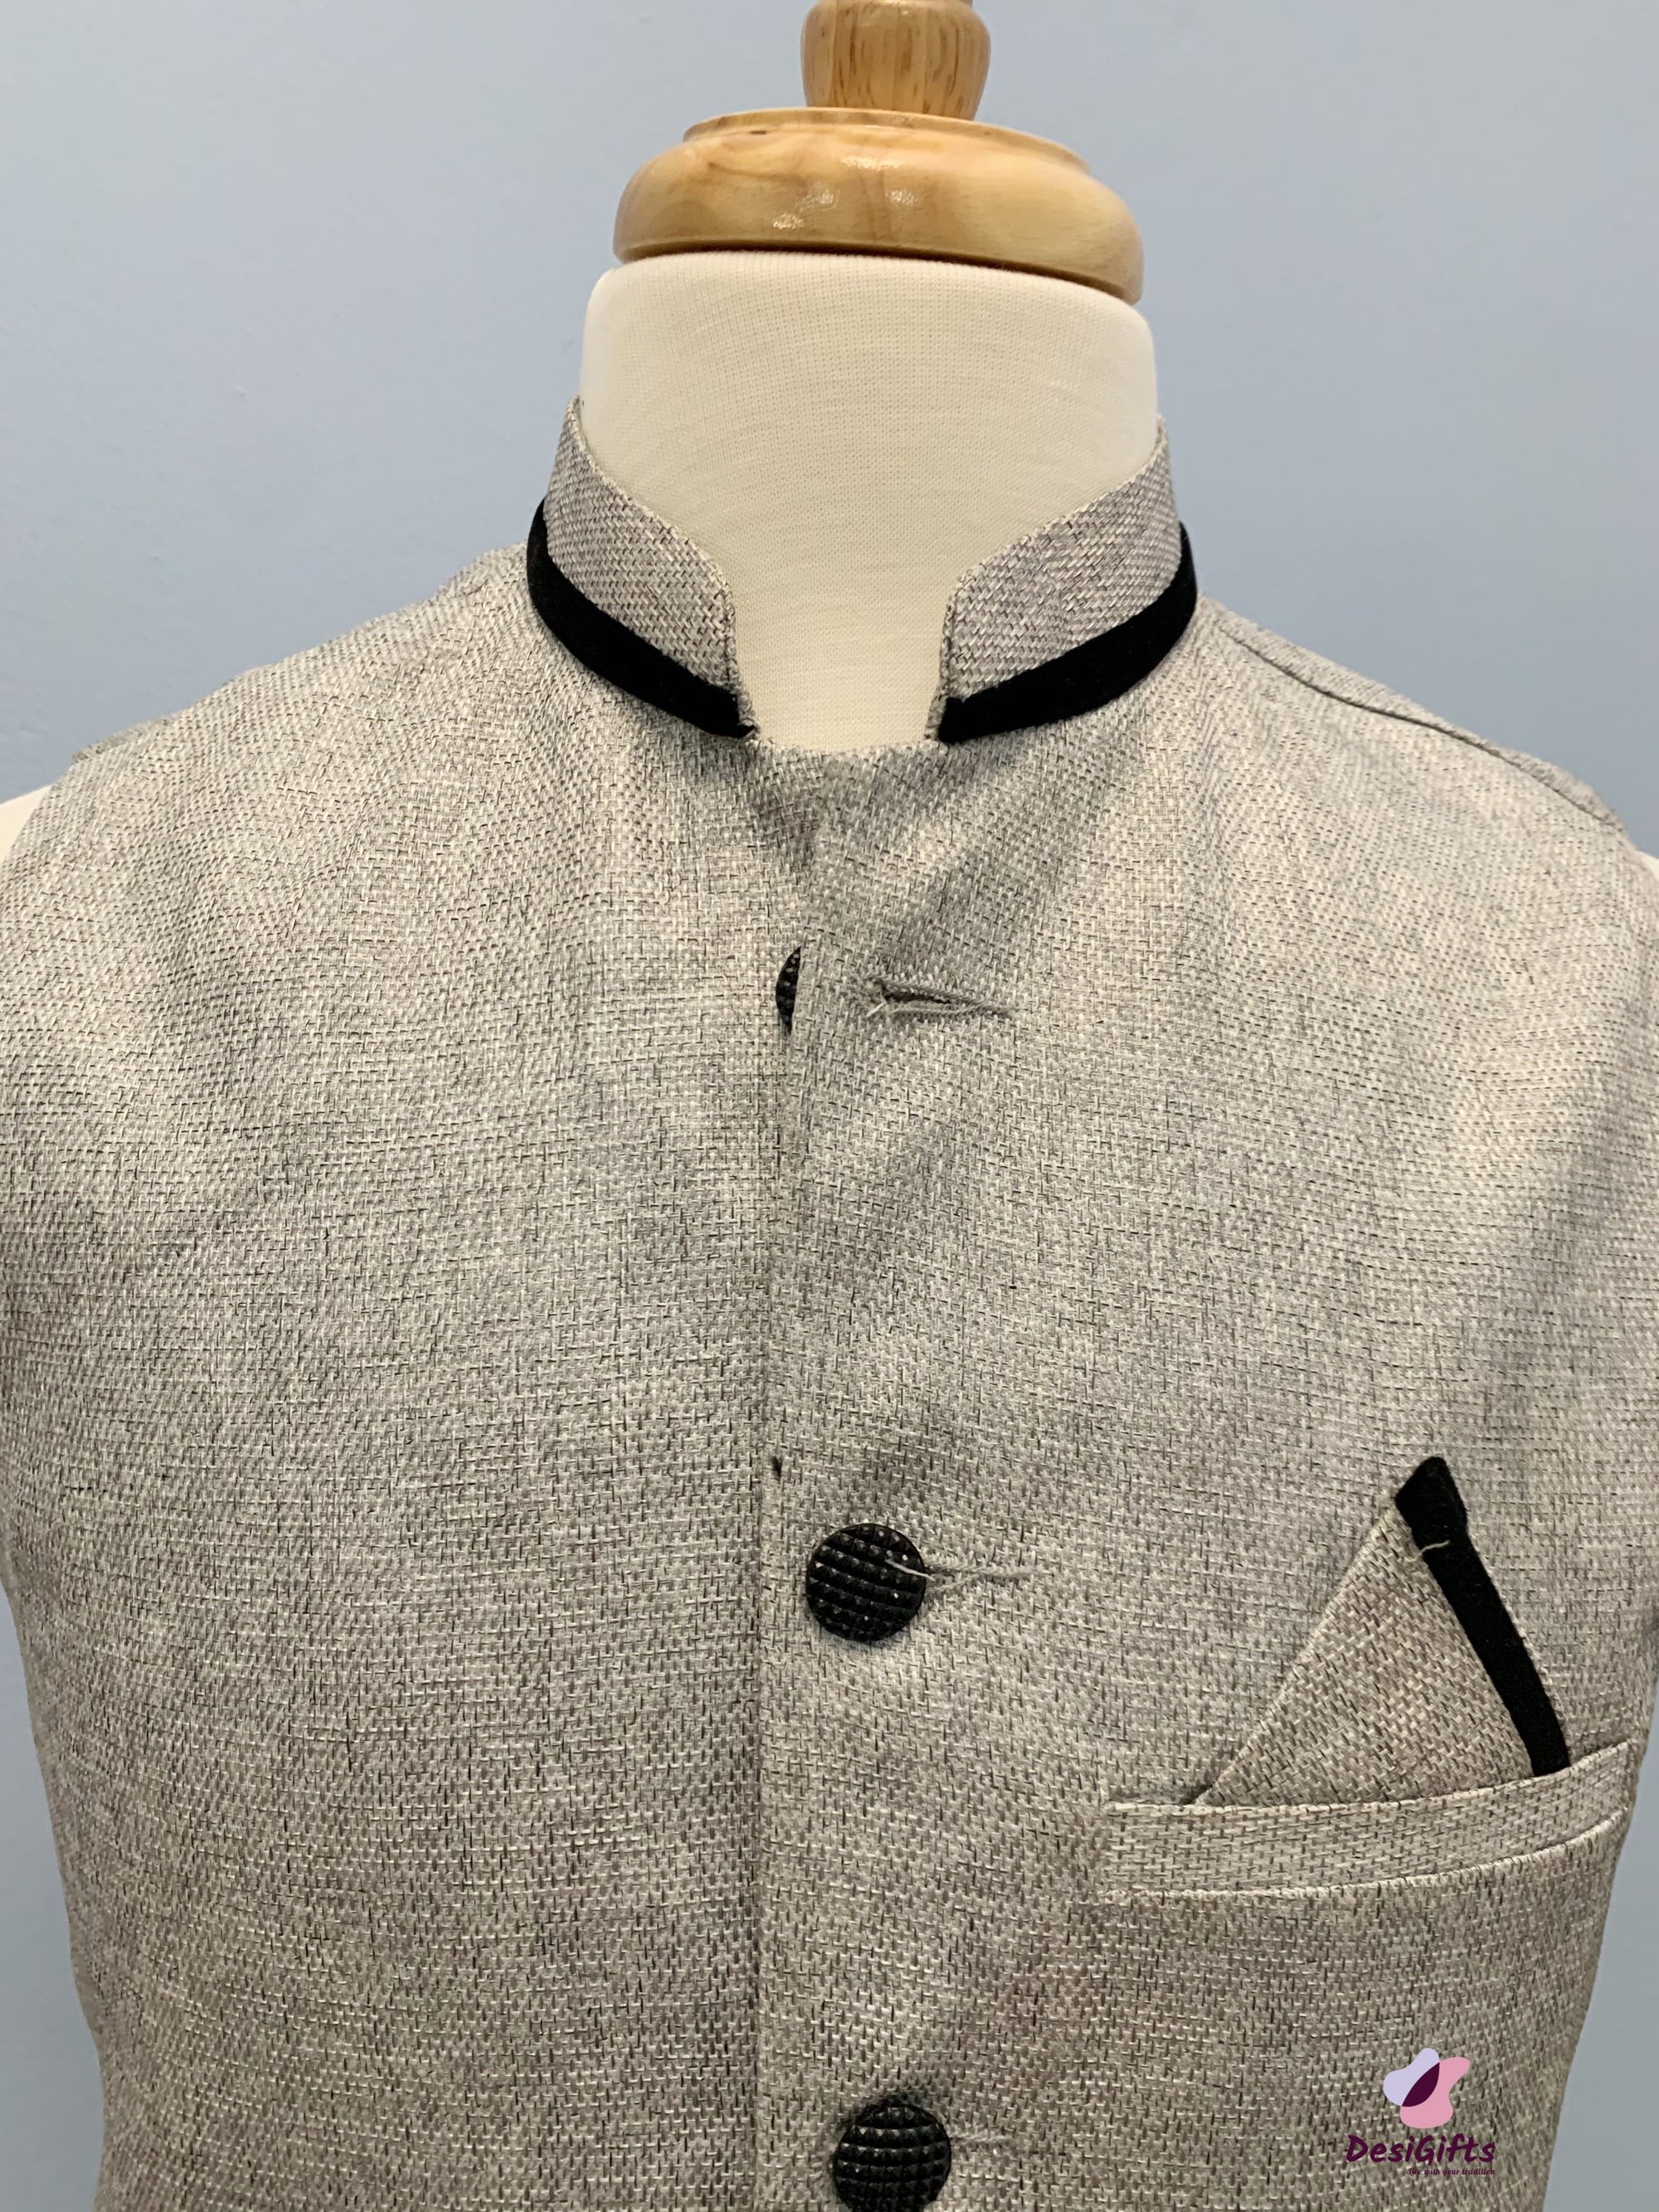 Plus Size Jute Cotton Nehru Style Jacket-Design, MJ#GRY 360